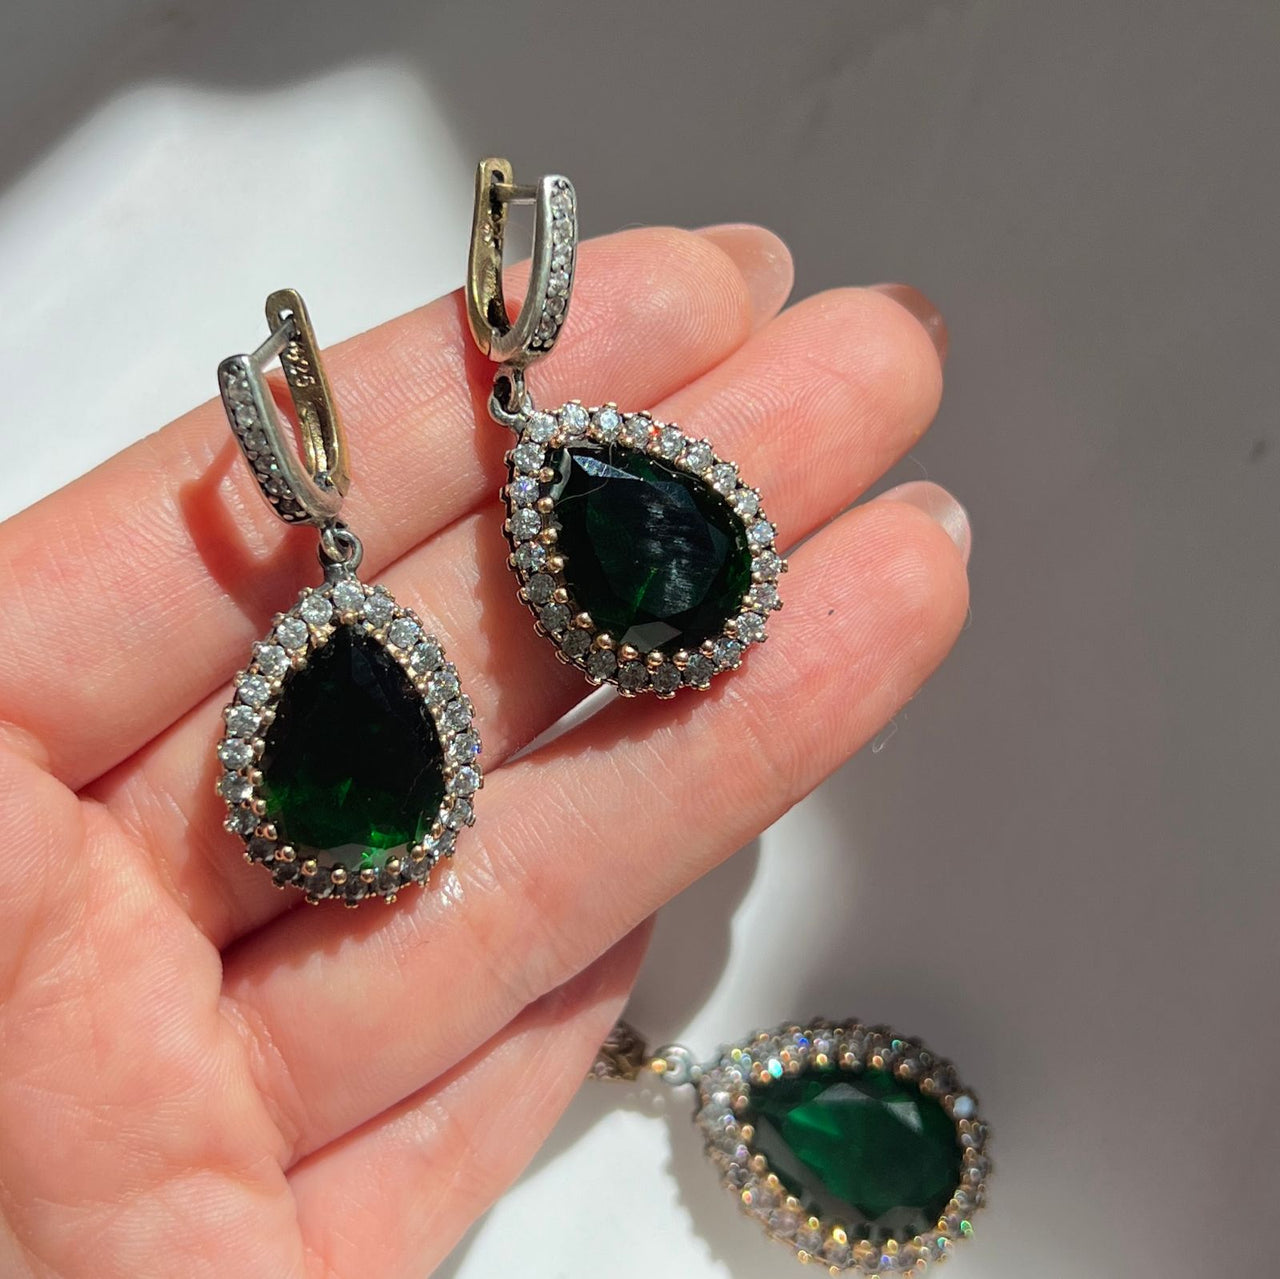 Sultana Hurrem earrings